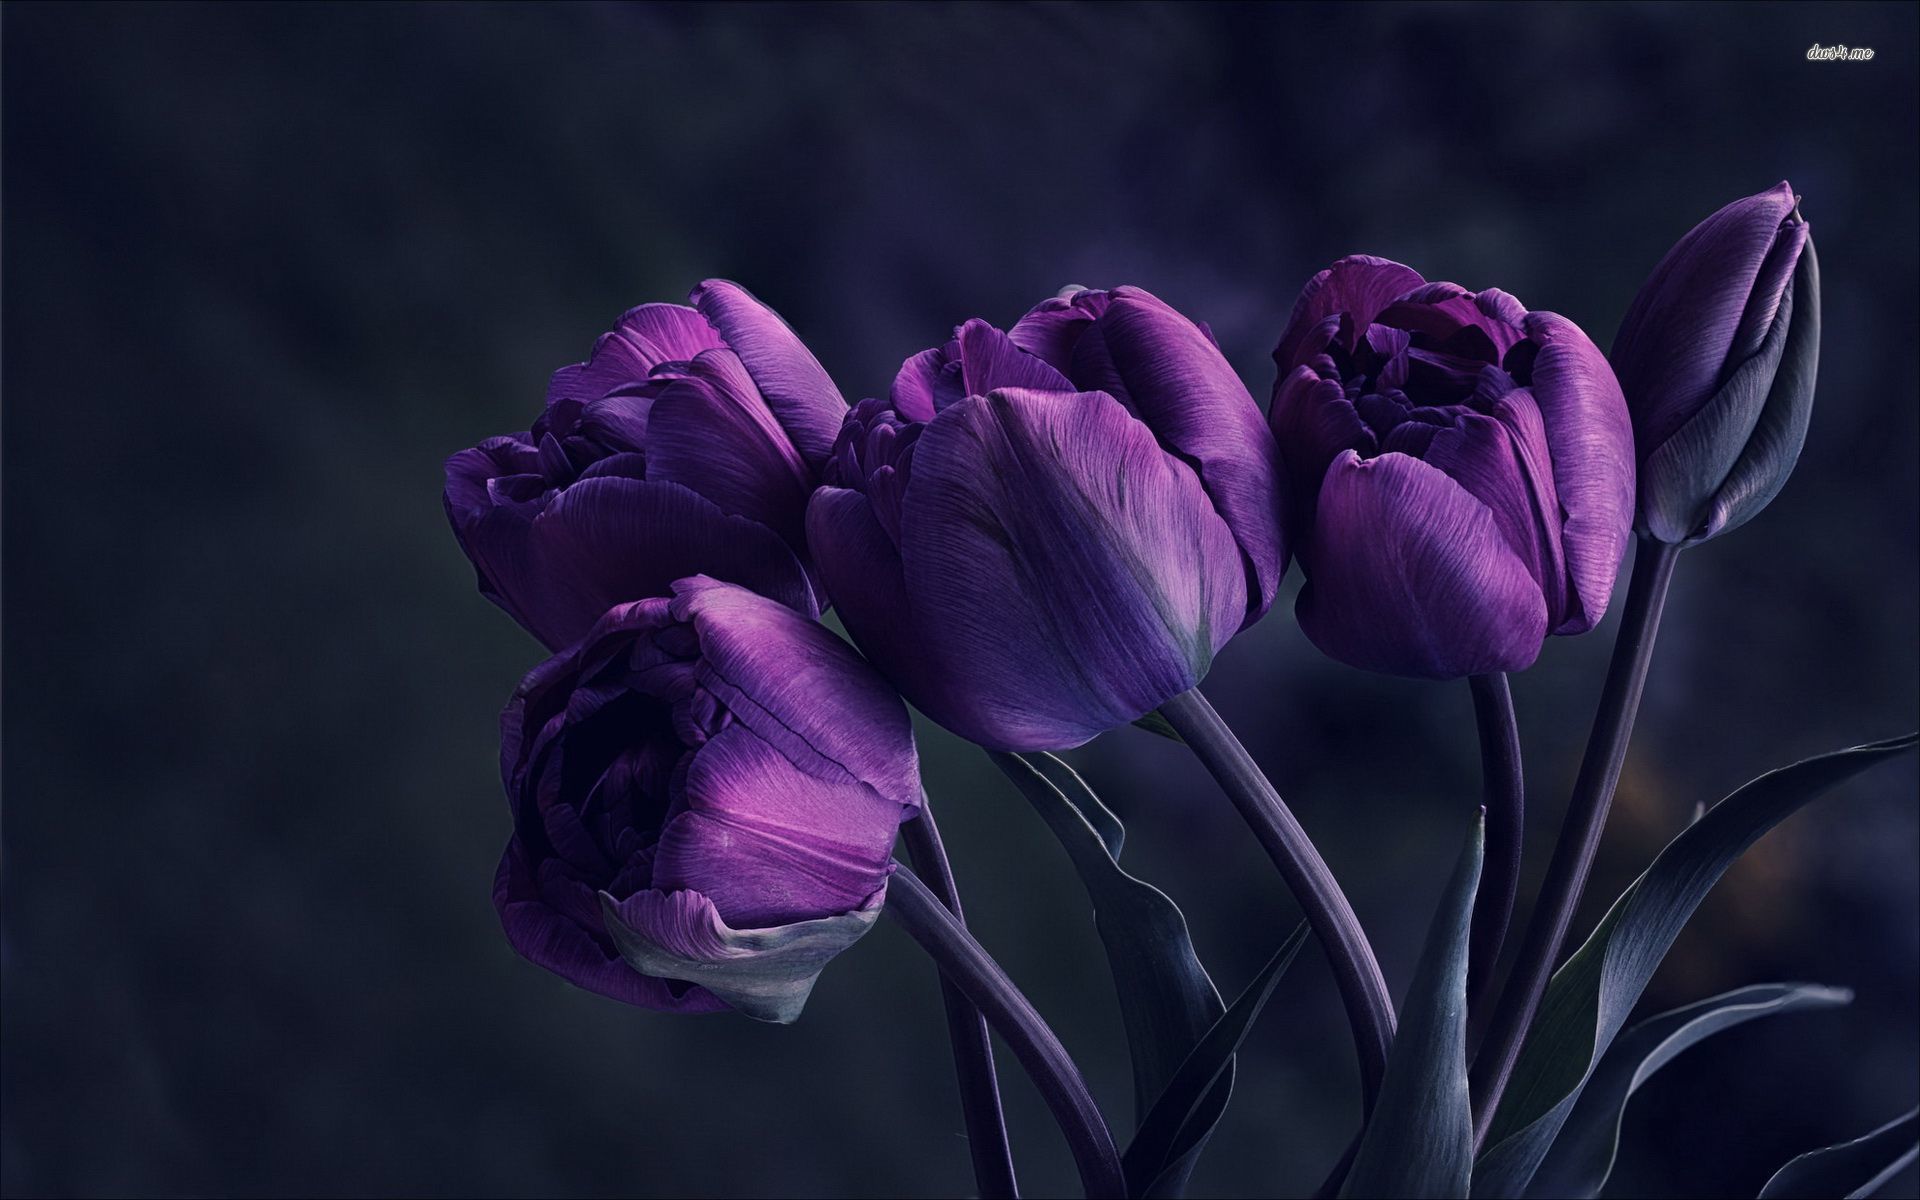 A bouquet of purple tulips on a dark background - Tulip